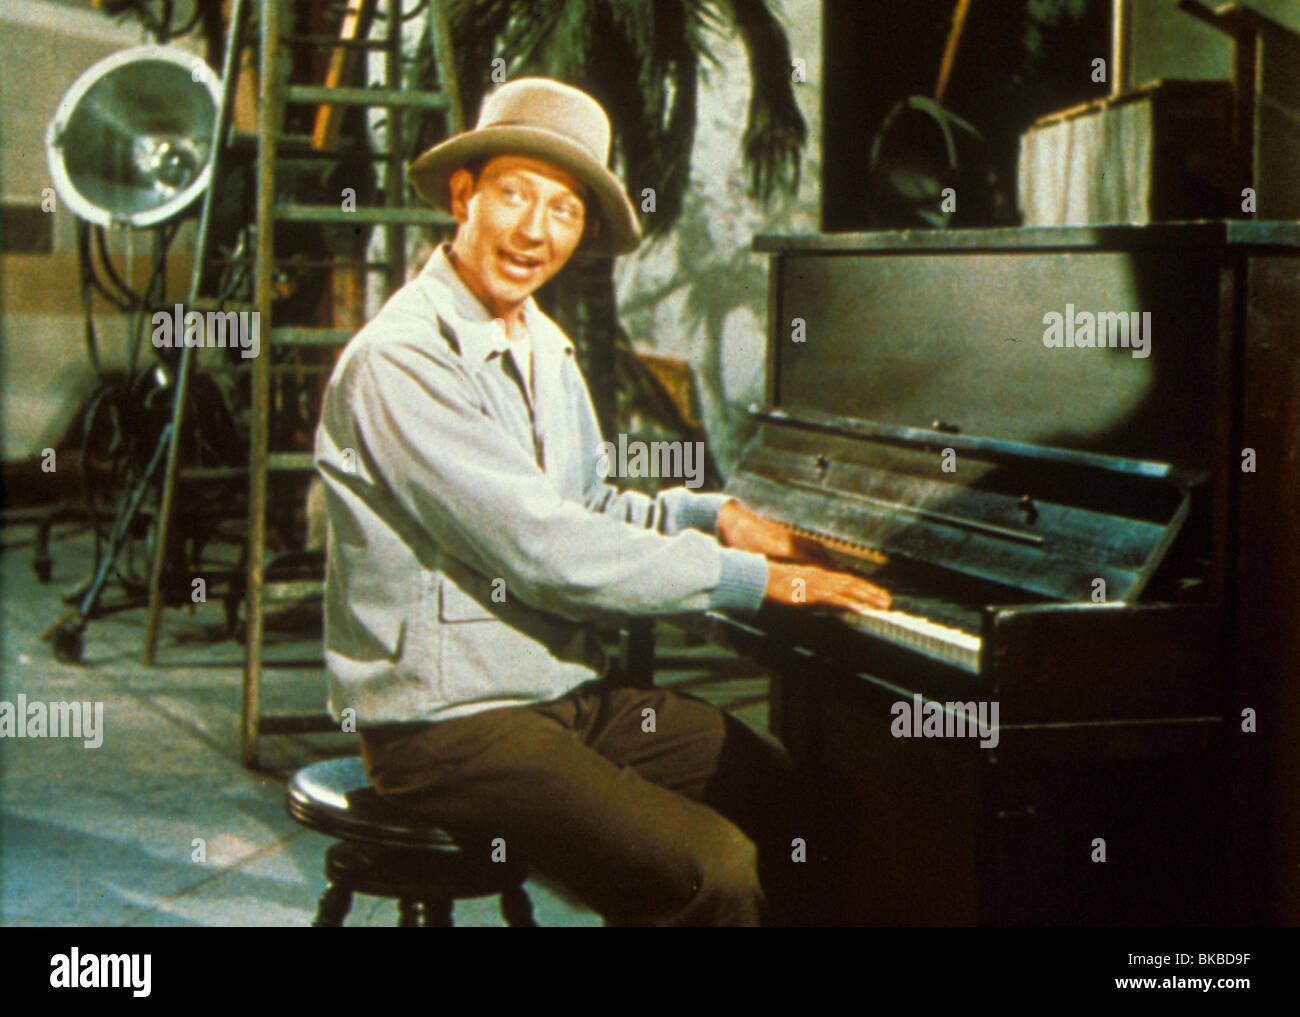 SINGIN IN THE RAIN (1952) SINGING IN THE RAIN (ALT) DONALD O'CONNER SIR 080 Stock Photo